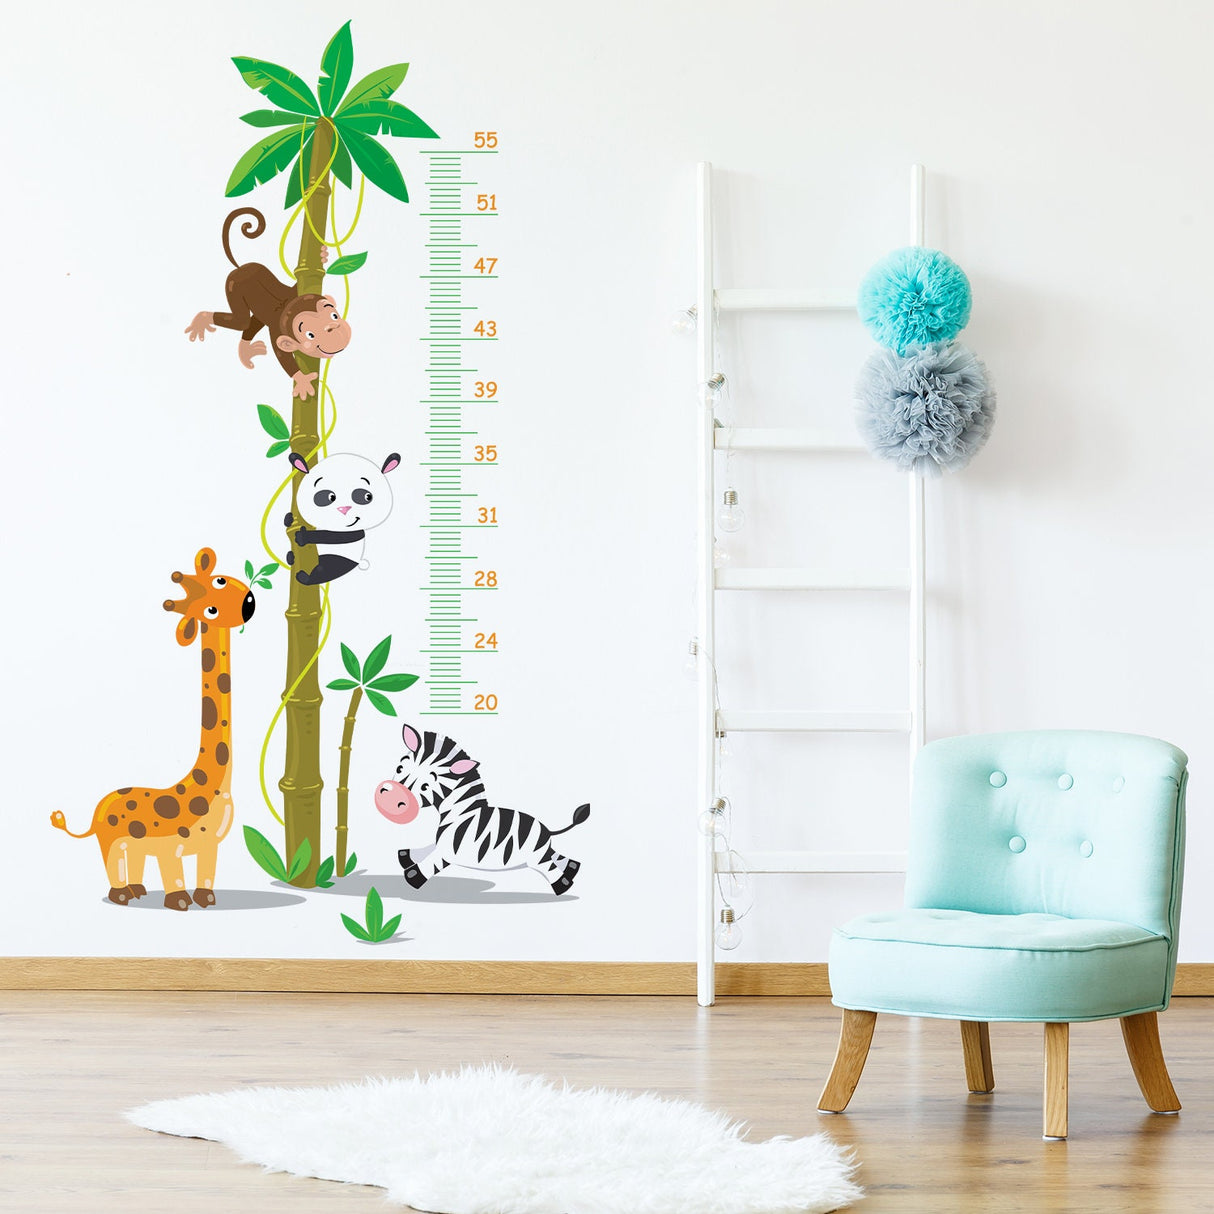 Chart Height Growth Wall Art Sticker - Nursery Kid Measurement Ruler Vinyl Decal - Giraffe Bedroom Children Tree Room Child Measuring